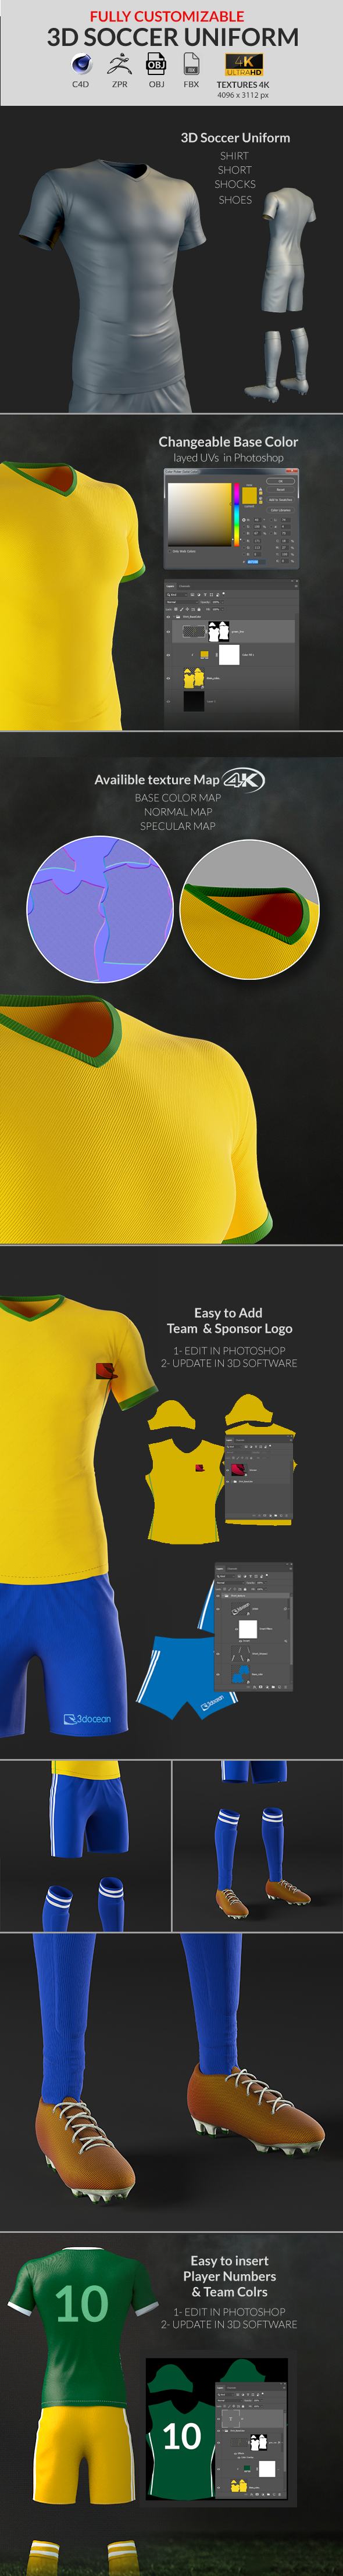 Soccer Uniform - 3Docean 23561849